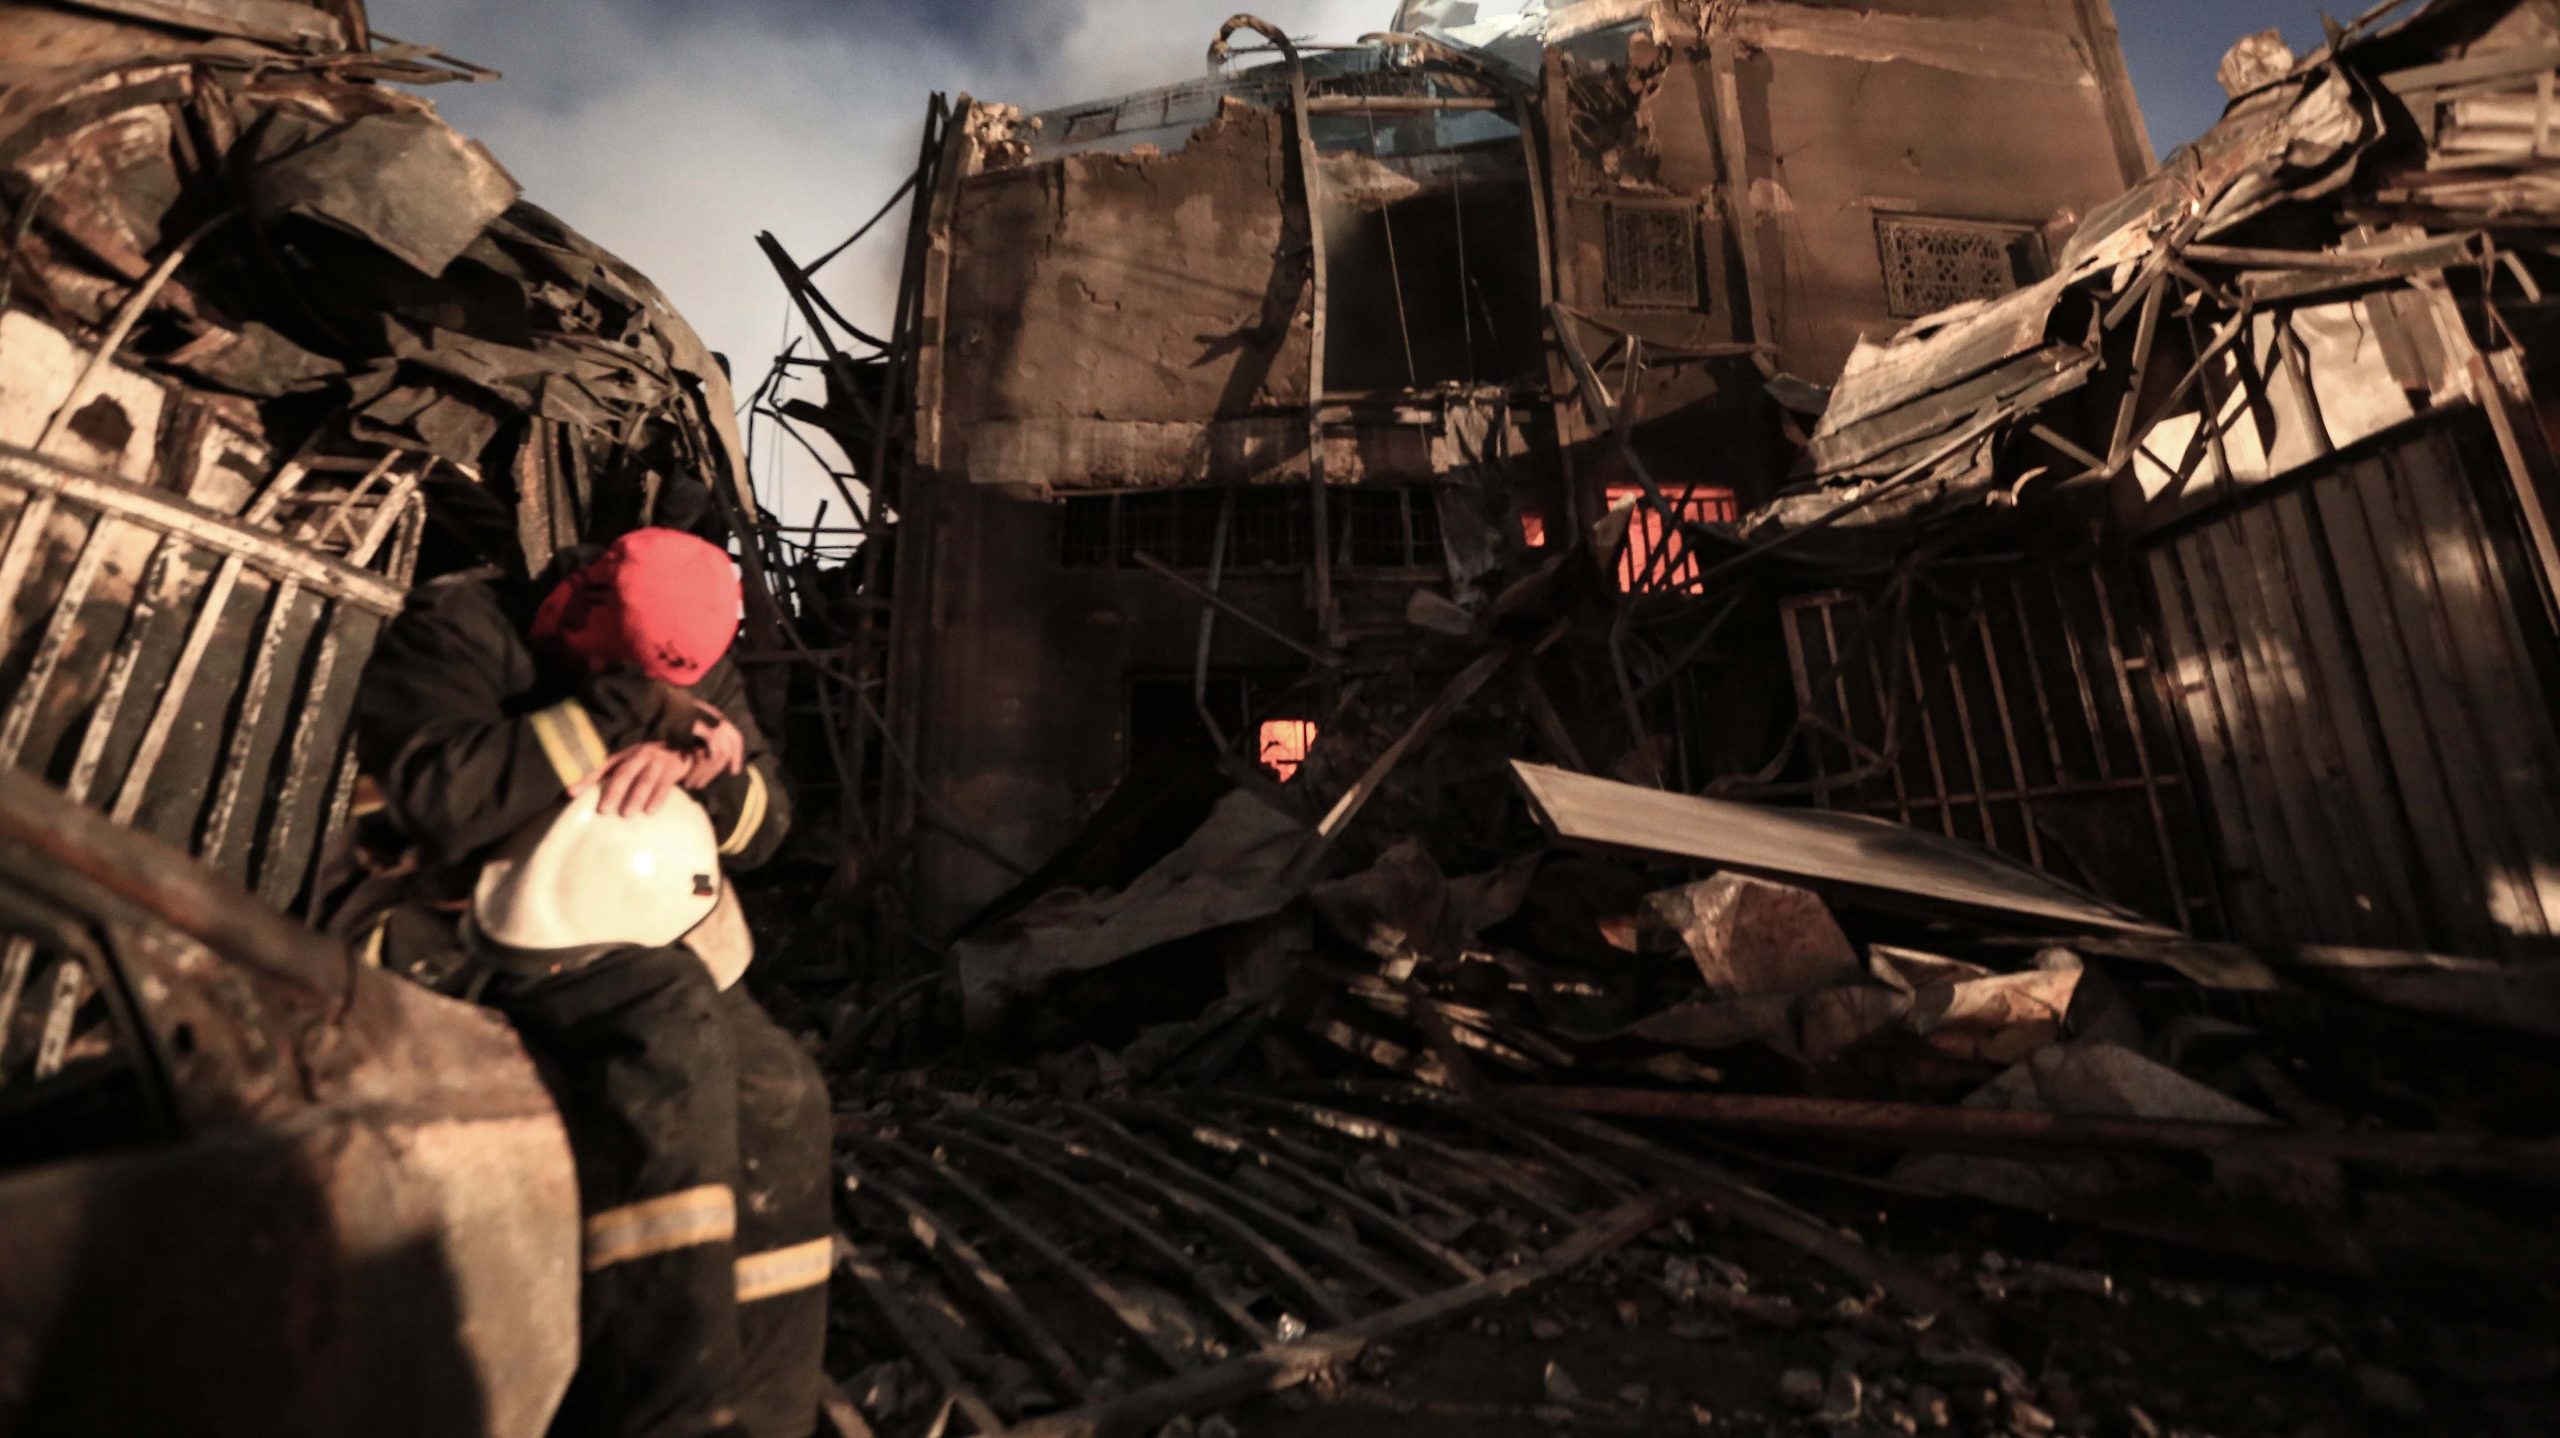 11 People Missing, 22 Injured in Baghdad Building Fire